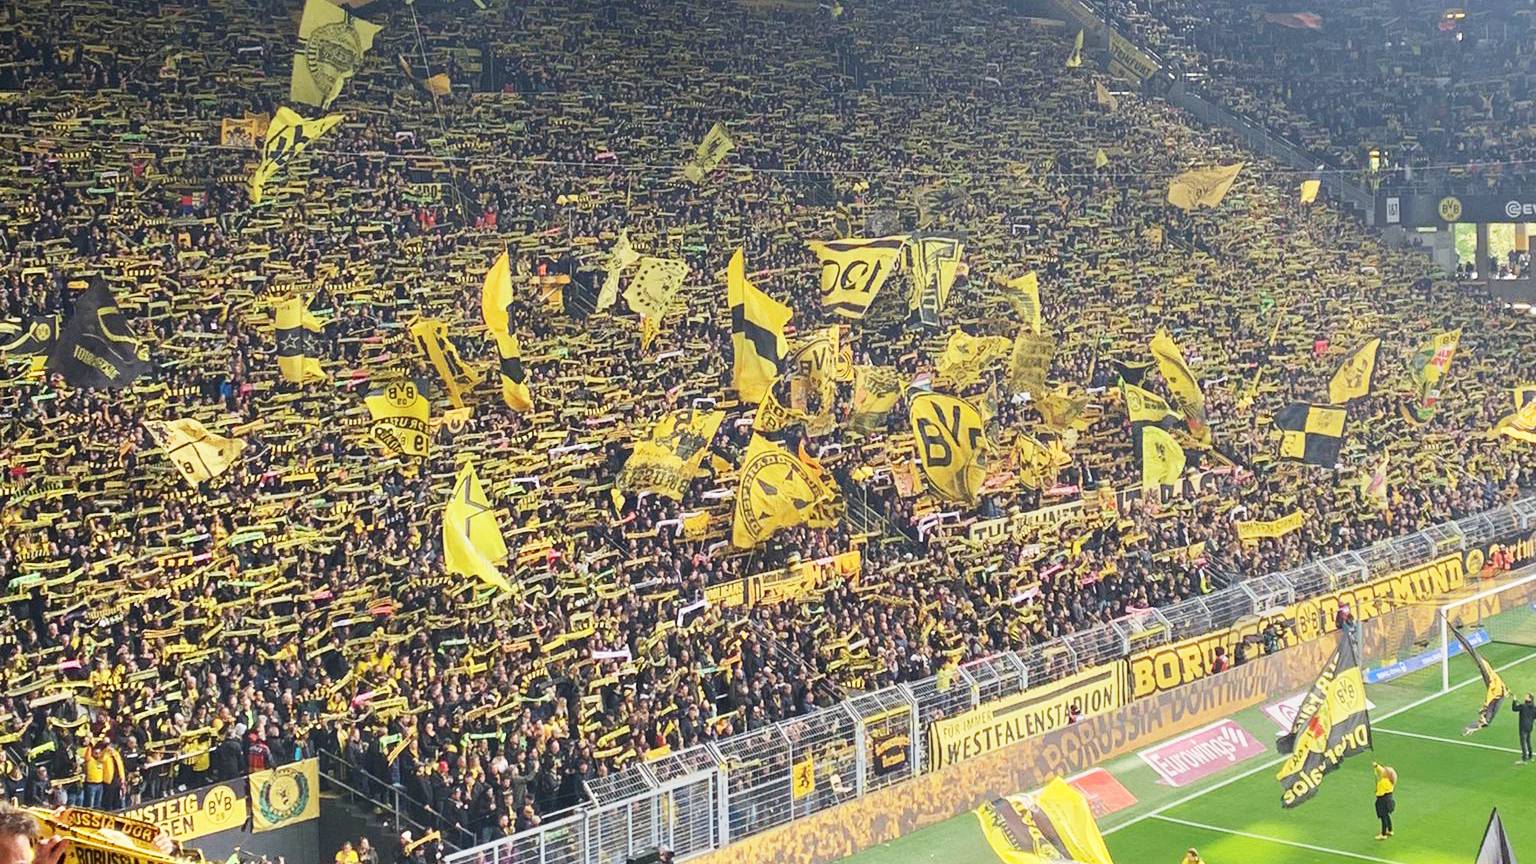 The Yellow Wall at Borussia Dortmund